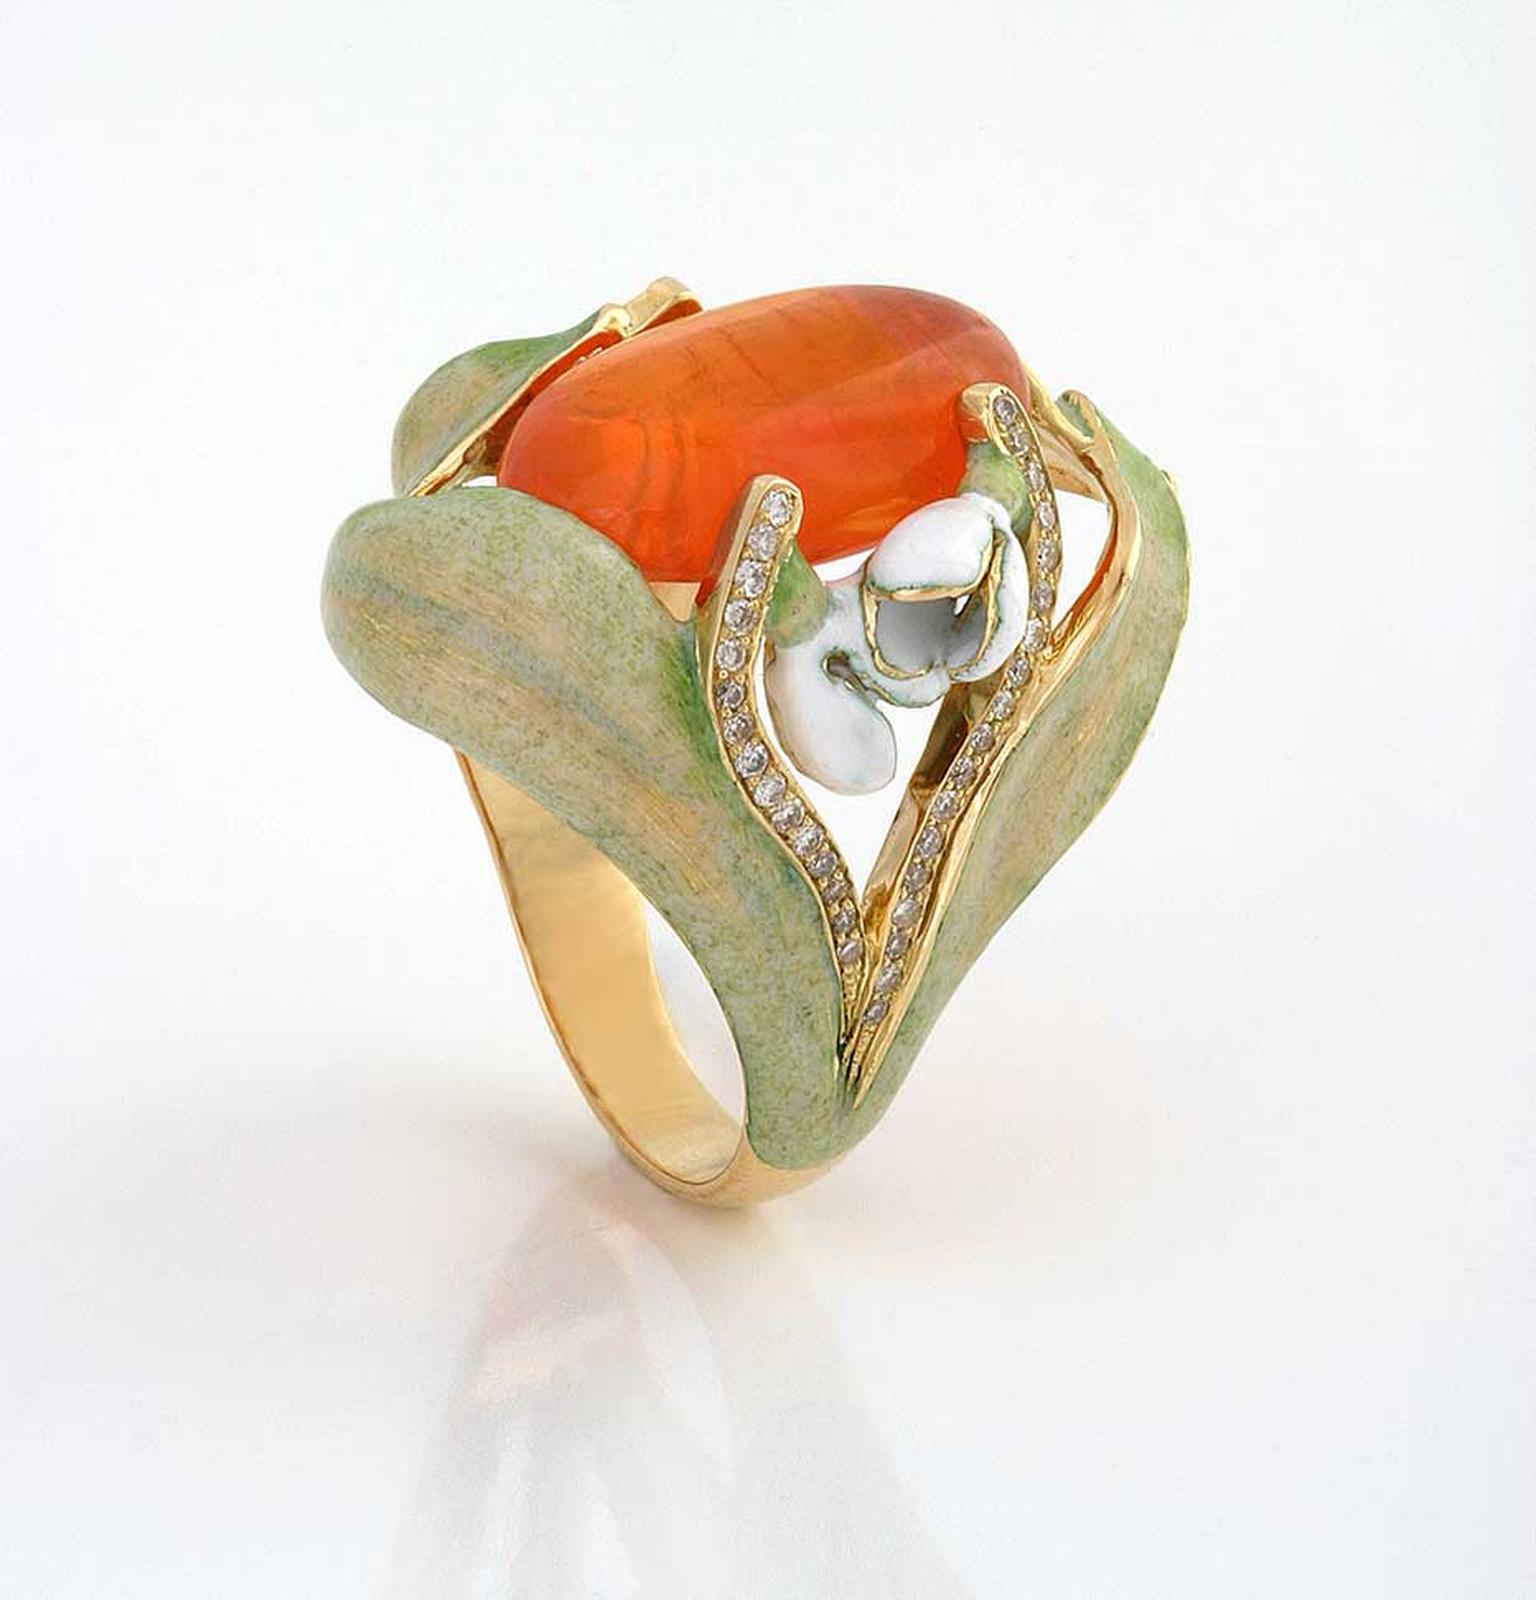 Ilgiz F "Snowdrop" ring, set with a fire opal